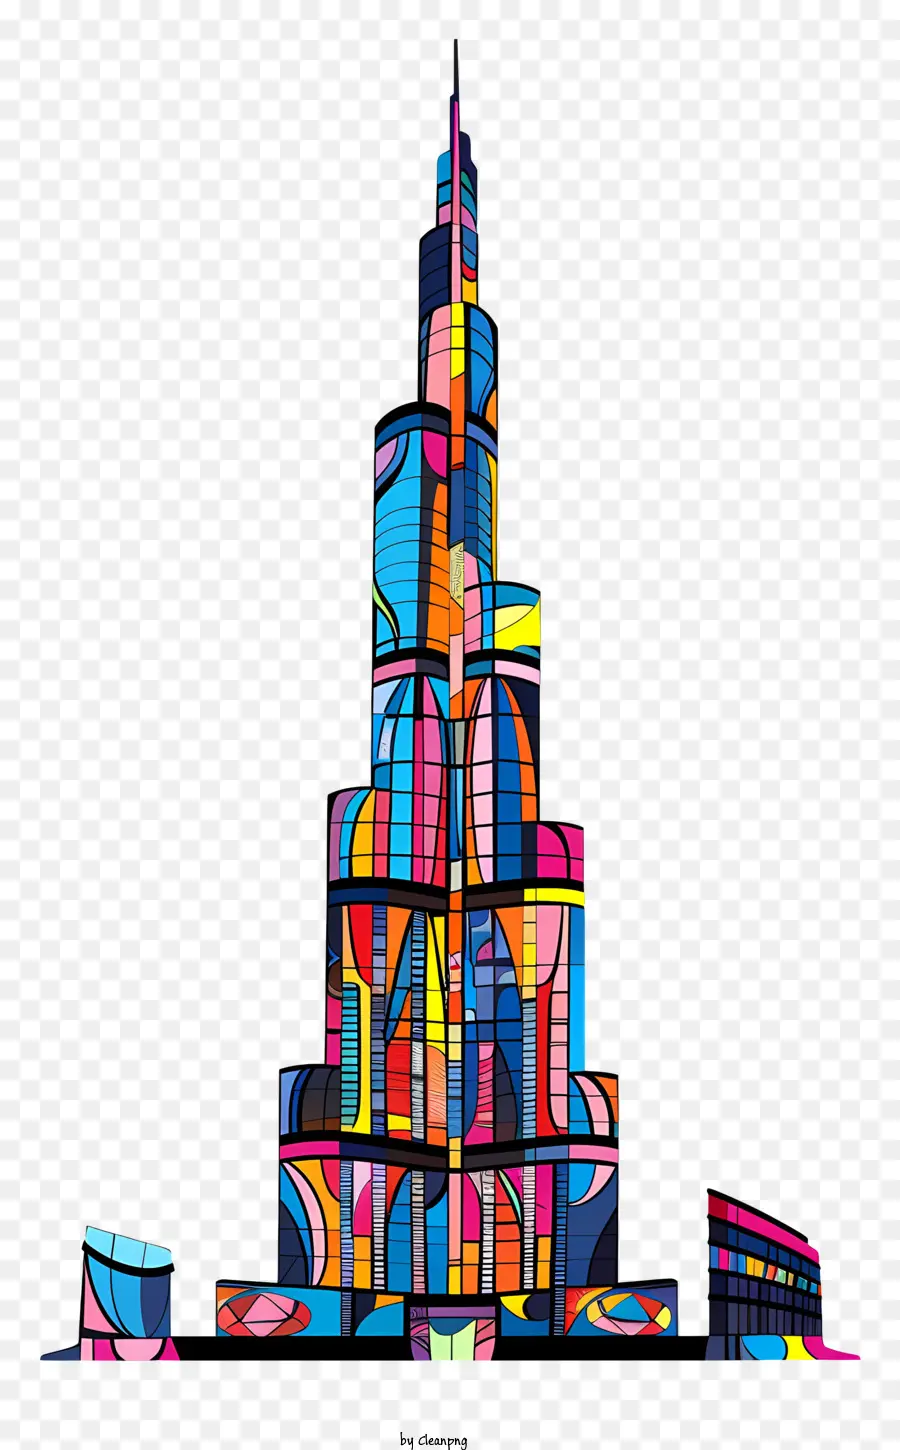 Burj Khalifa Burj Khalifa SkyCopper - Digitale Illustration des legendären Burj Khalifa Wolkenkratzers